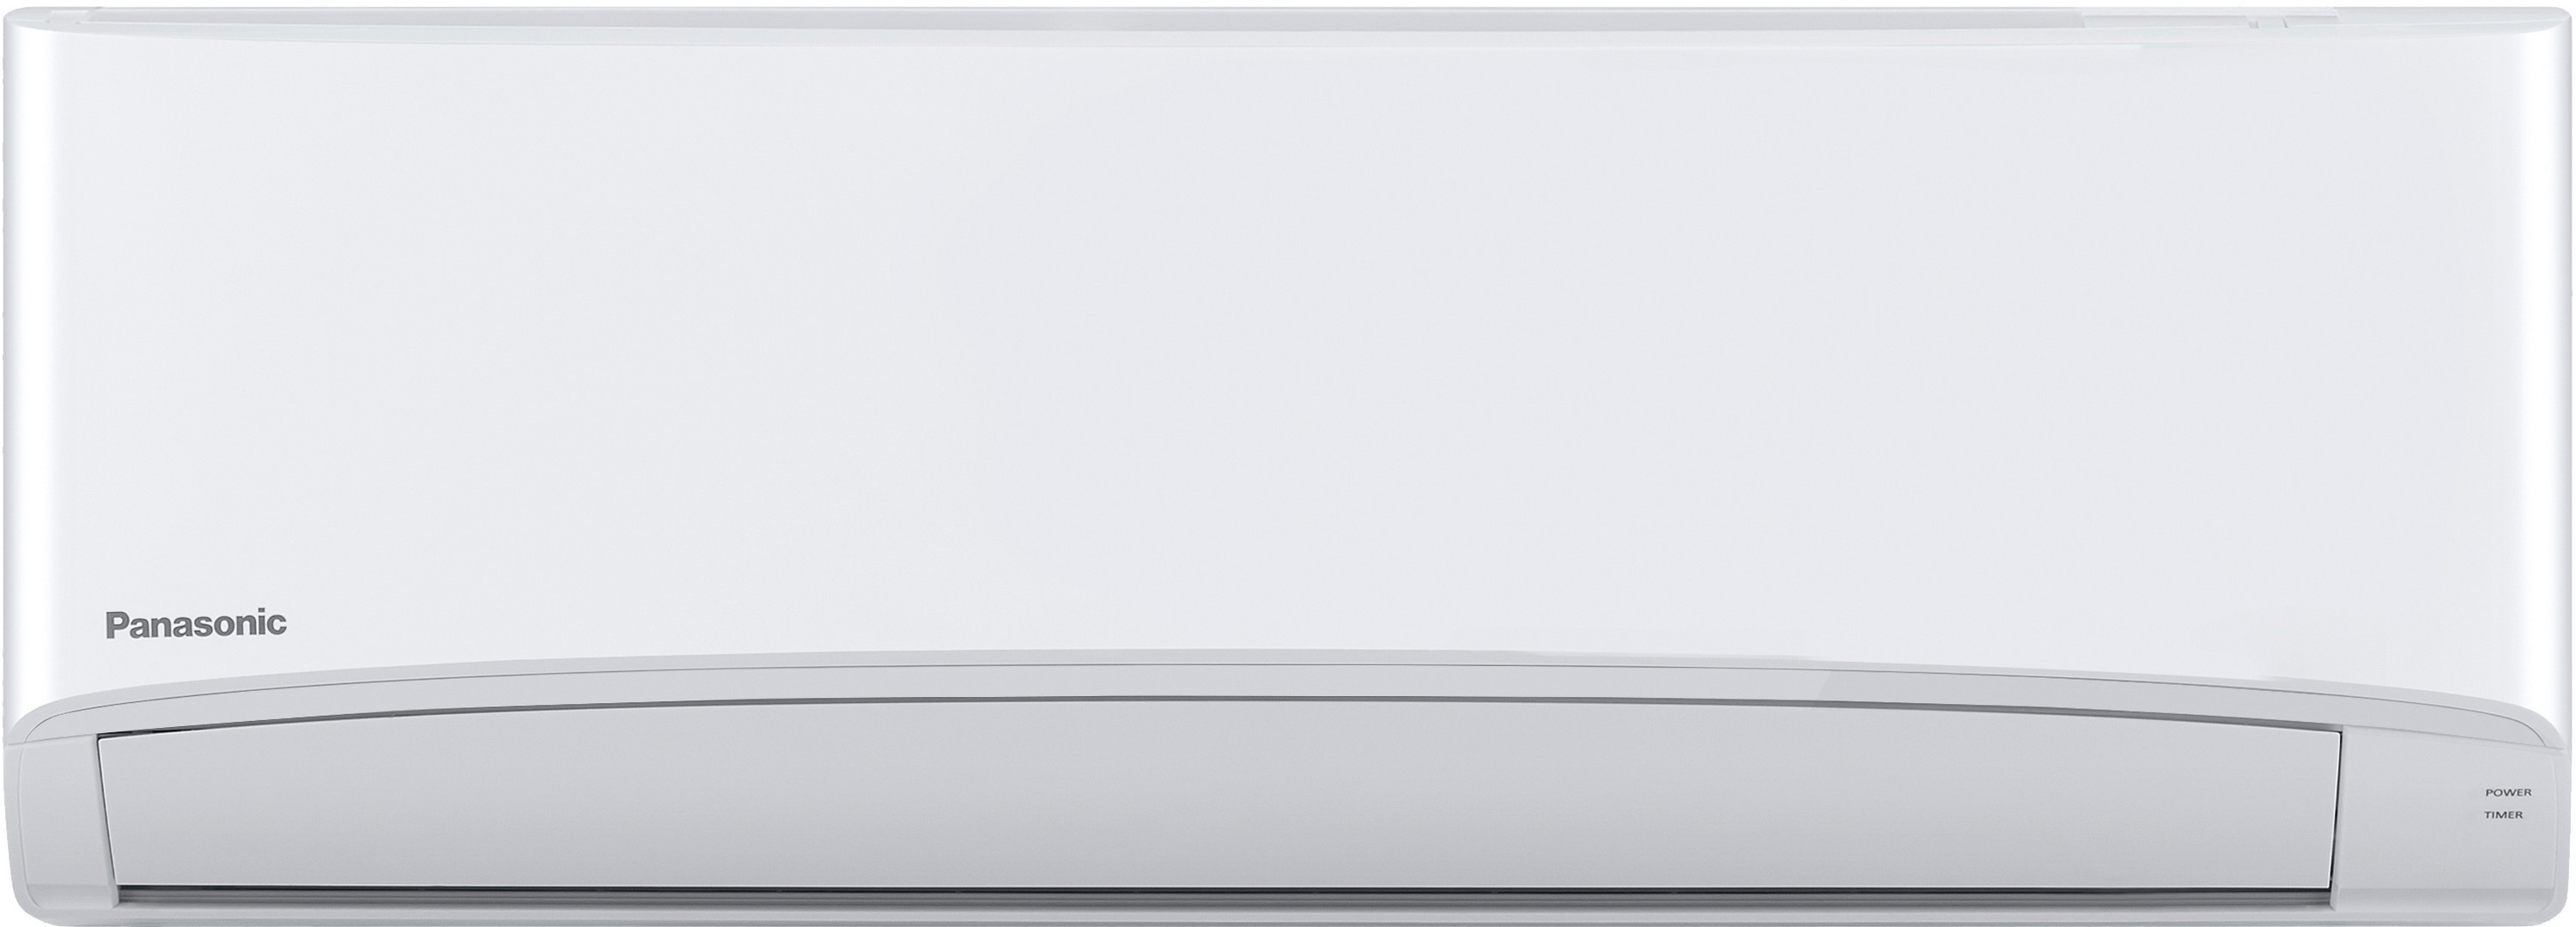 Кондиционер сплит-система Panasonic Compact Inverter CS/CU-TZ42TKEW-1 цена 55999.00 грн - фотография 2